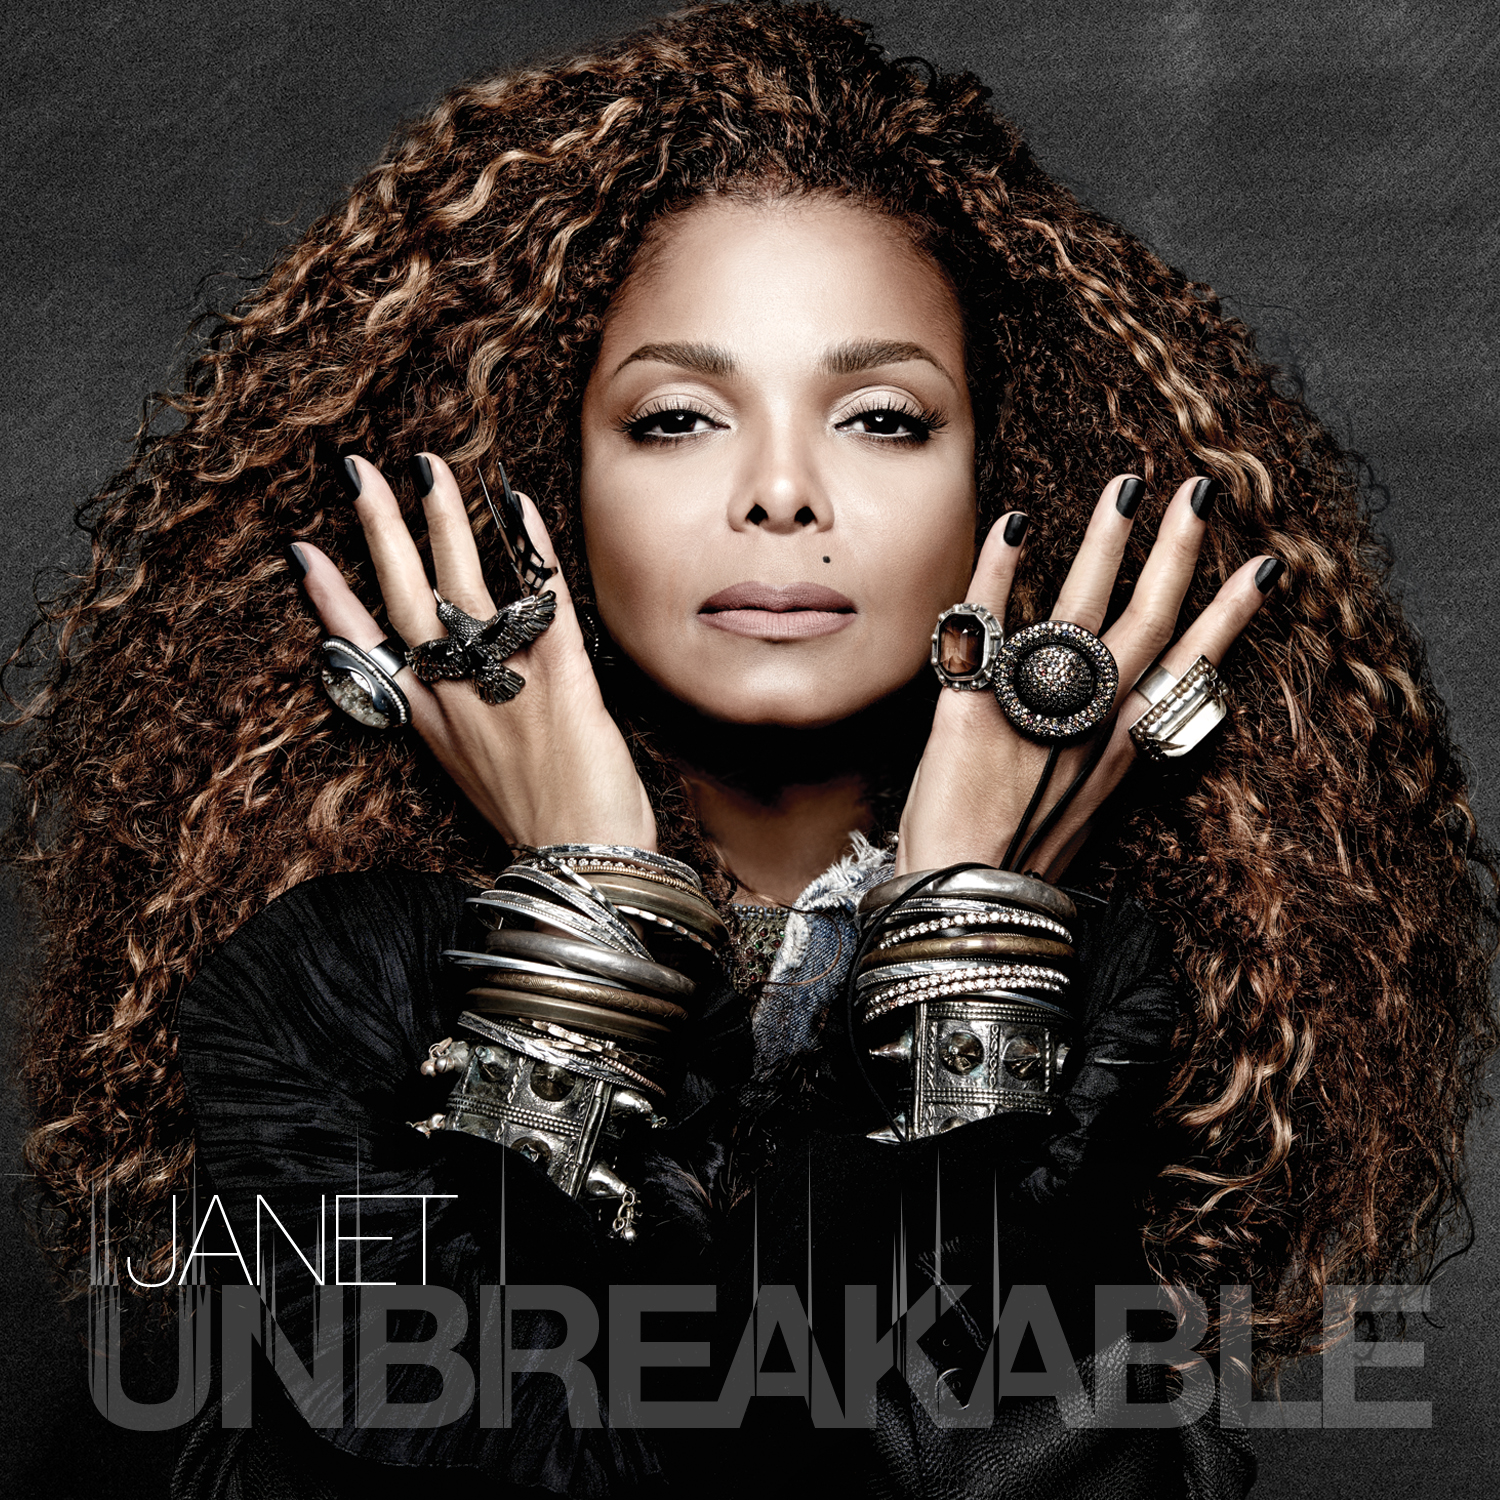 Janet Jackson “unbreakable“ Echte Leute 